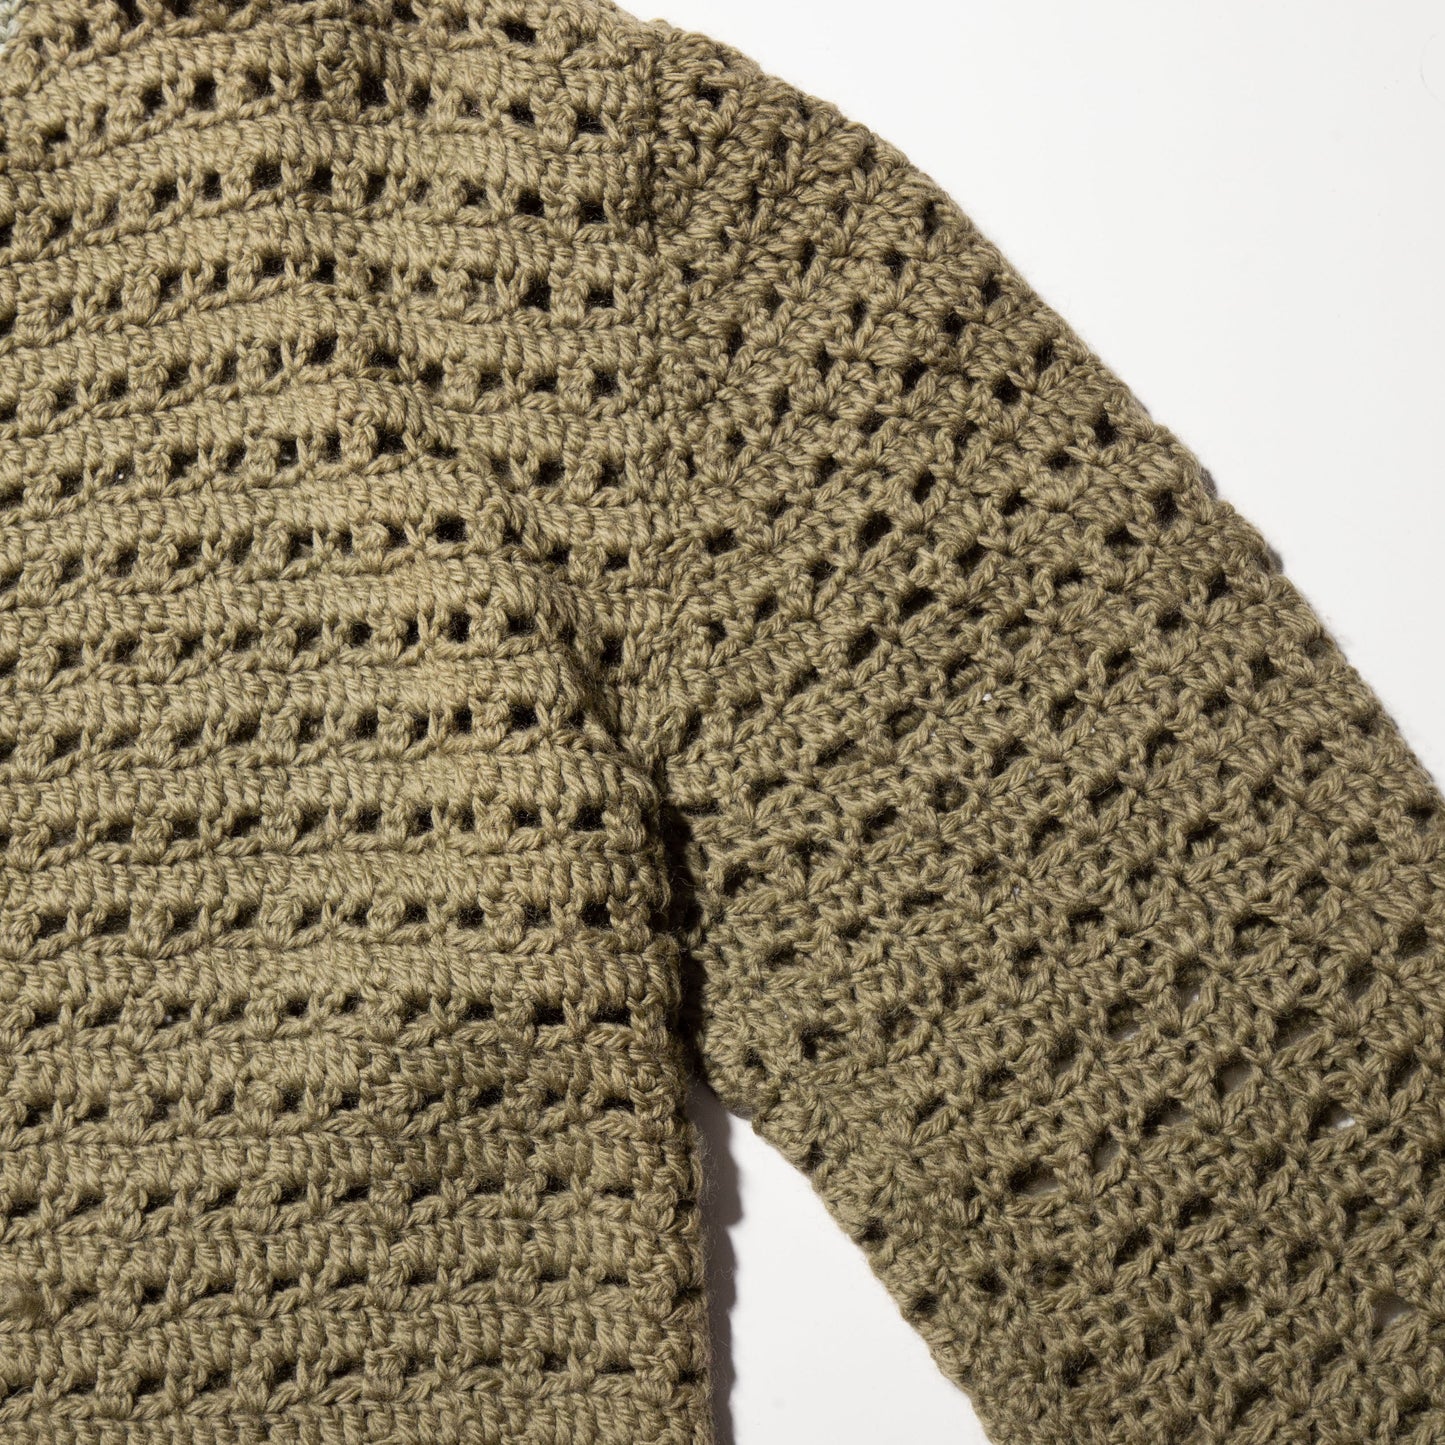 vintage crochet knit jacket